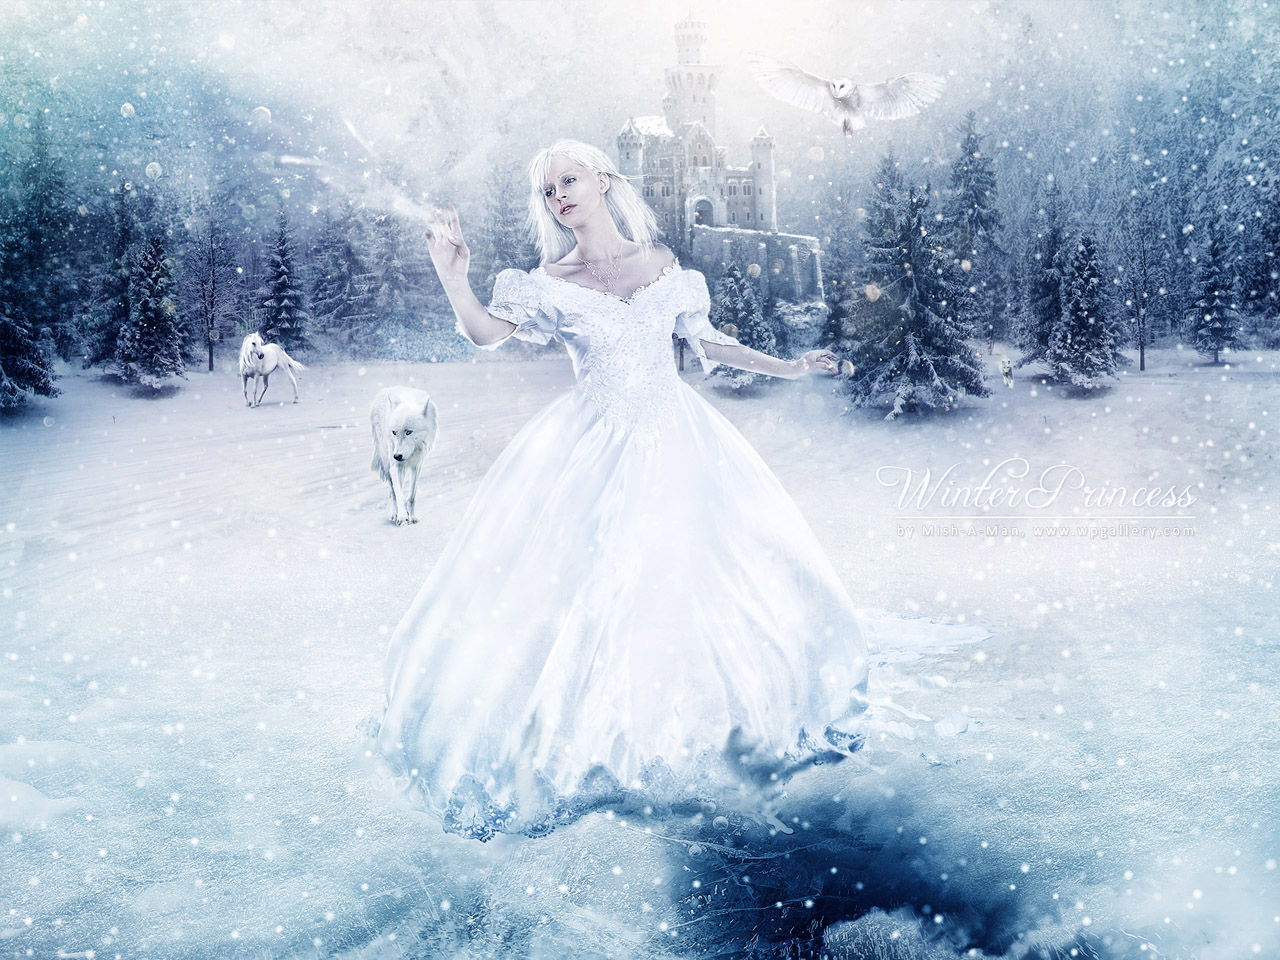 Winter Princess by Mish-A-Man